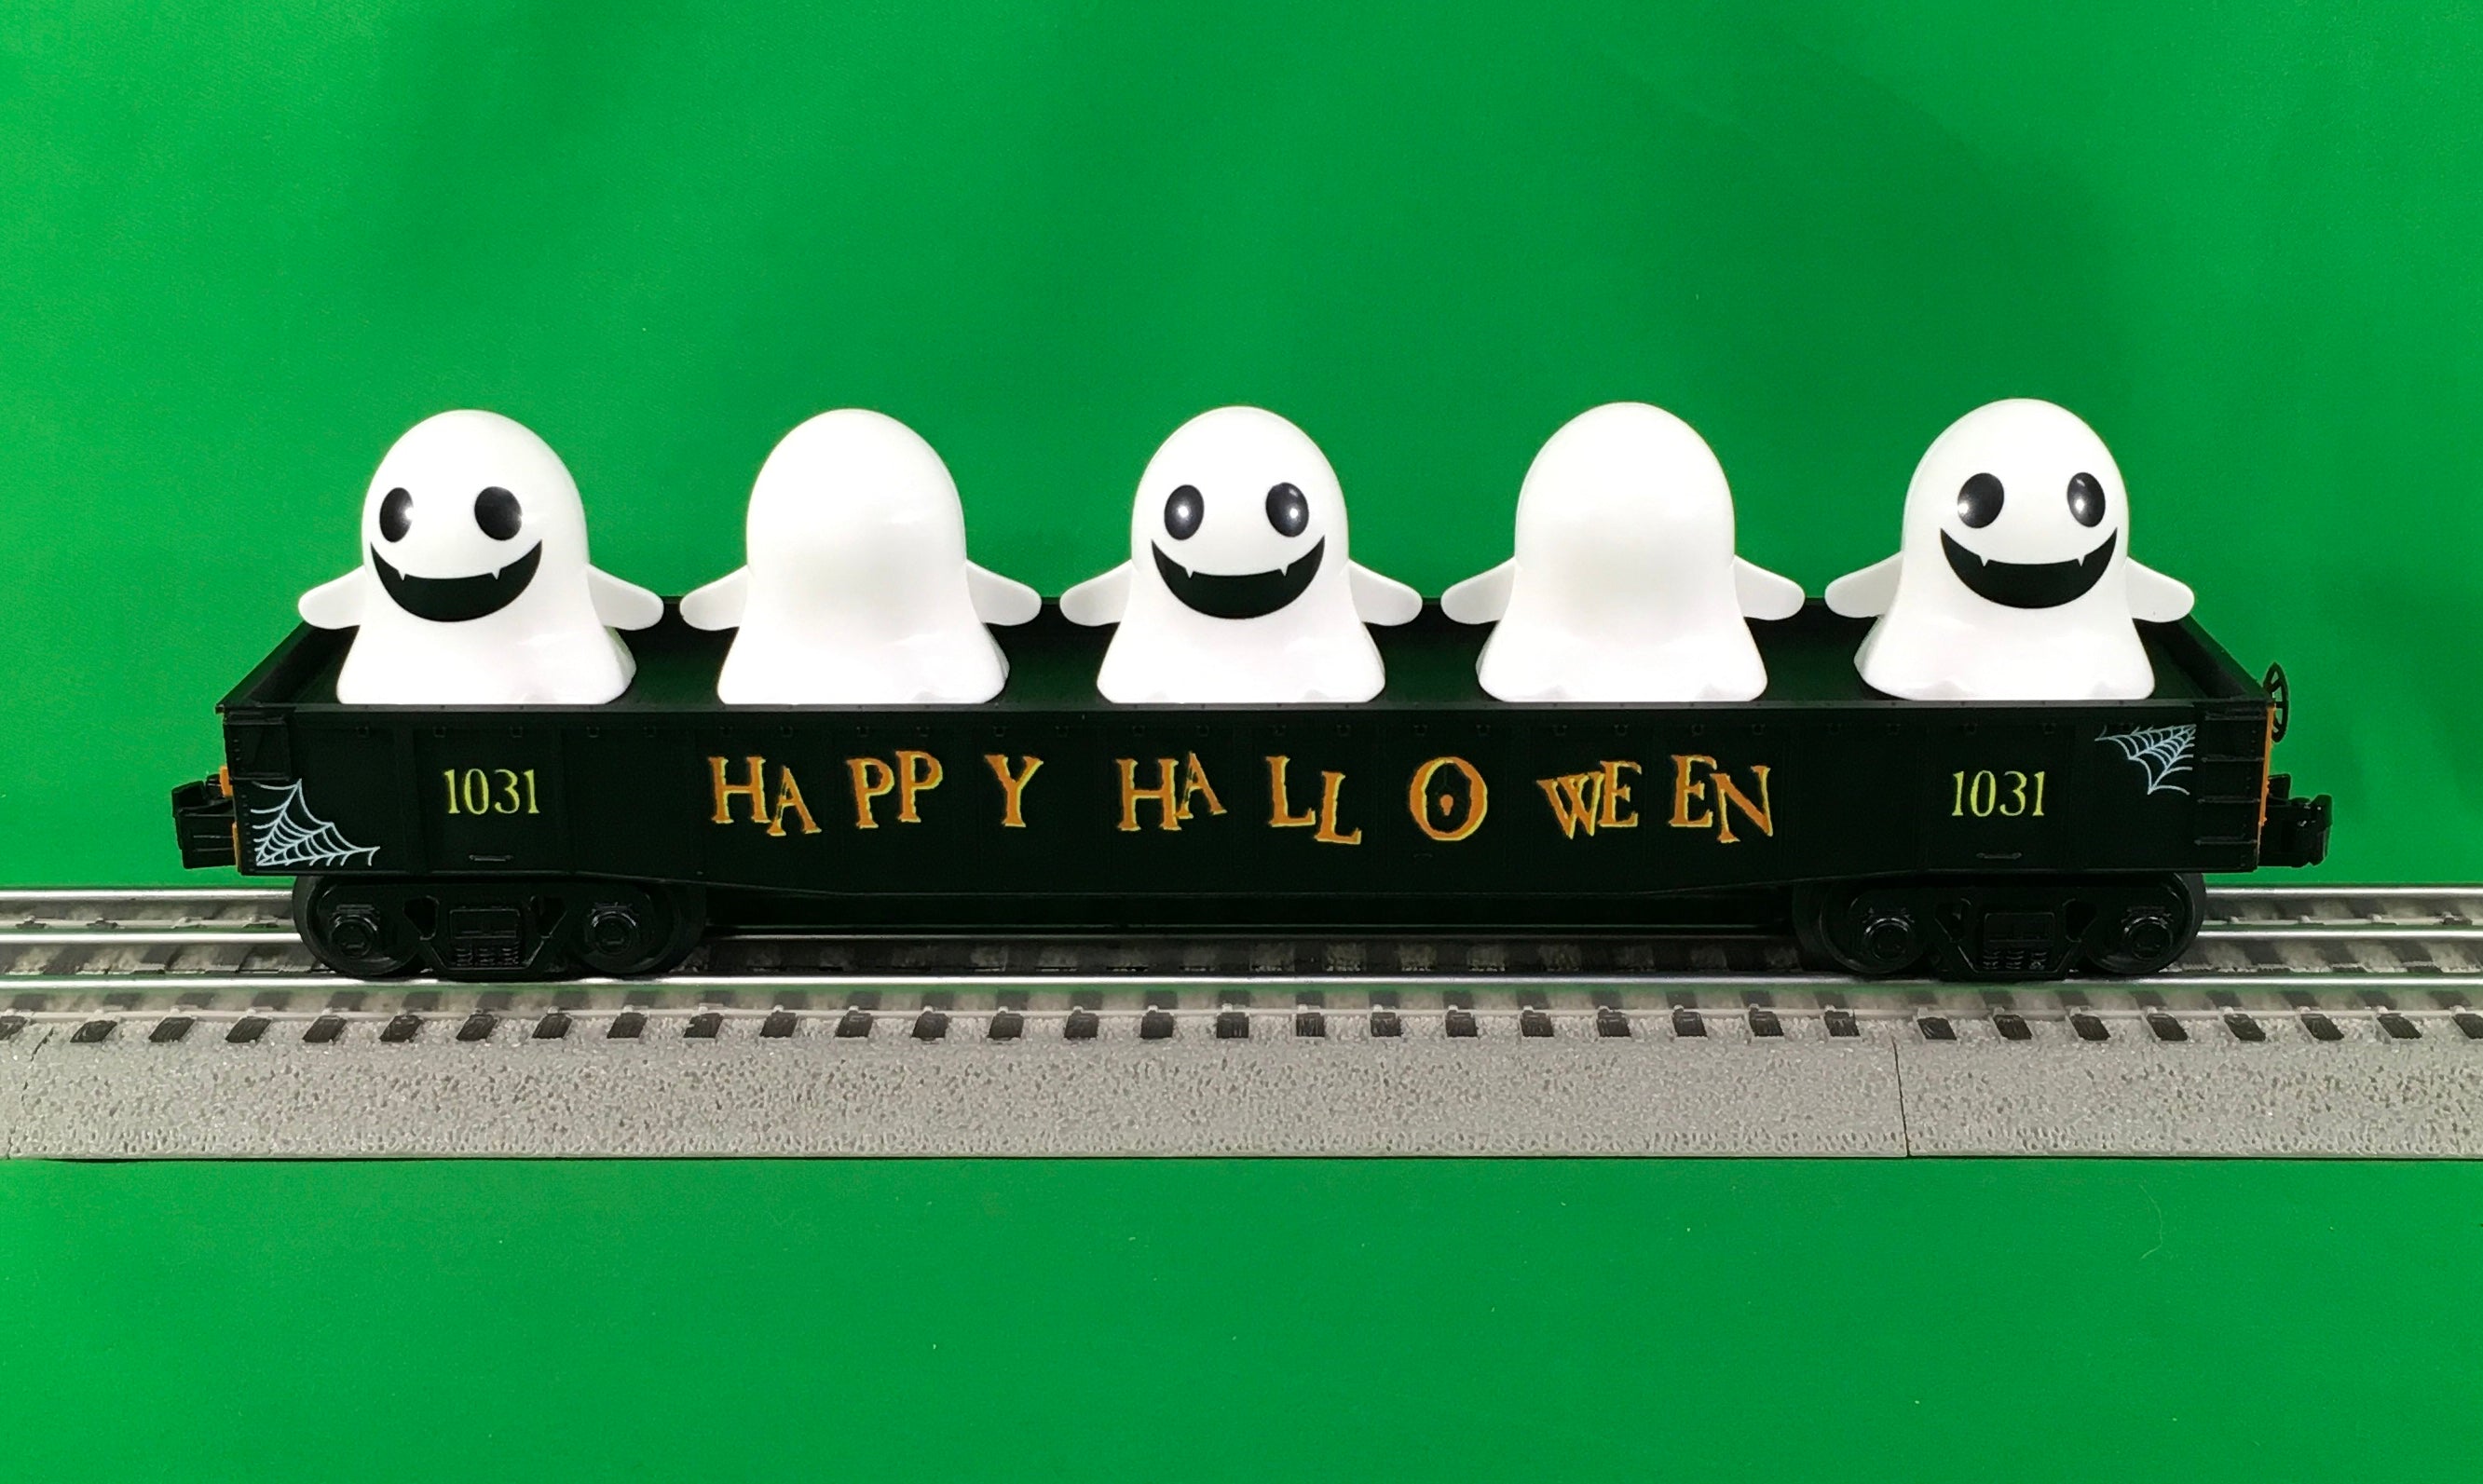 MTH 30-72226 - Gondola Car "Halloween" w/ Flickering Lighted Ghosts #1031 (Black)